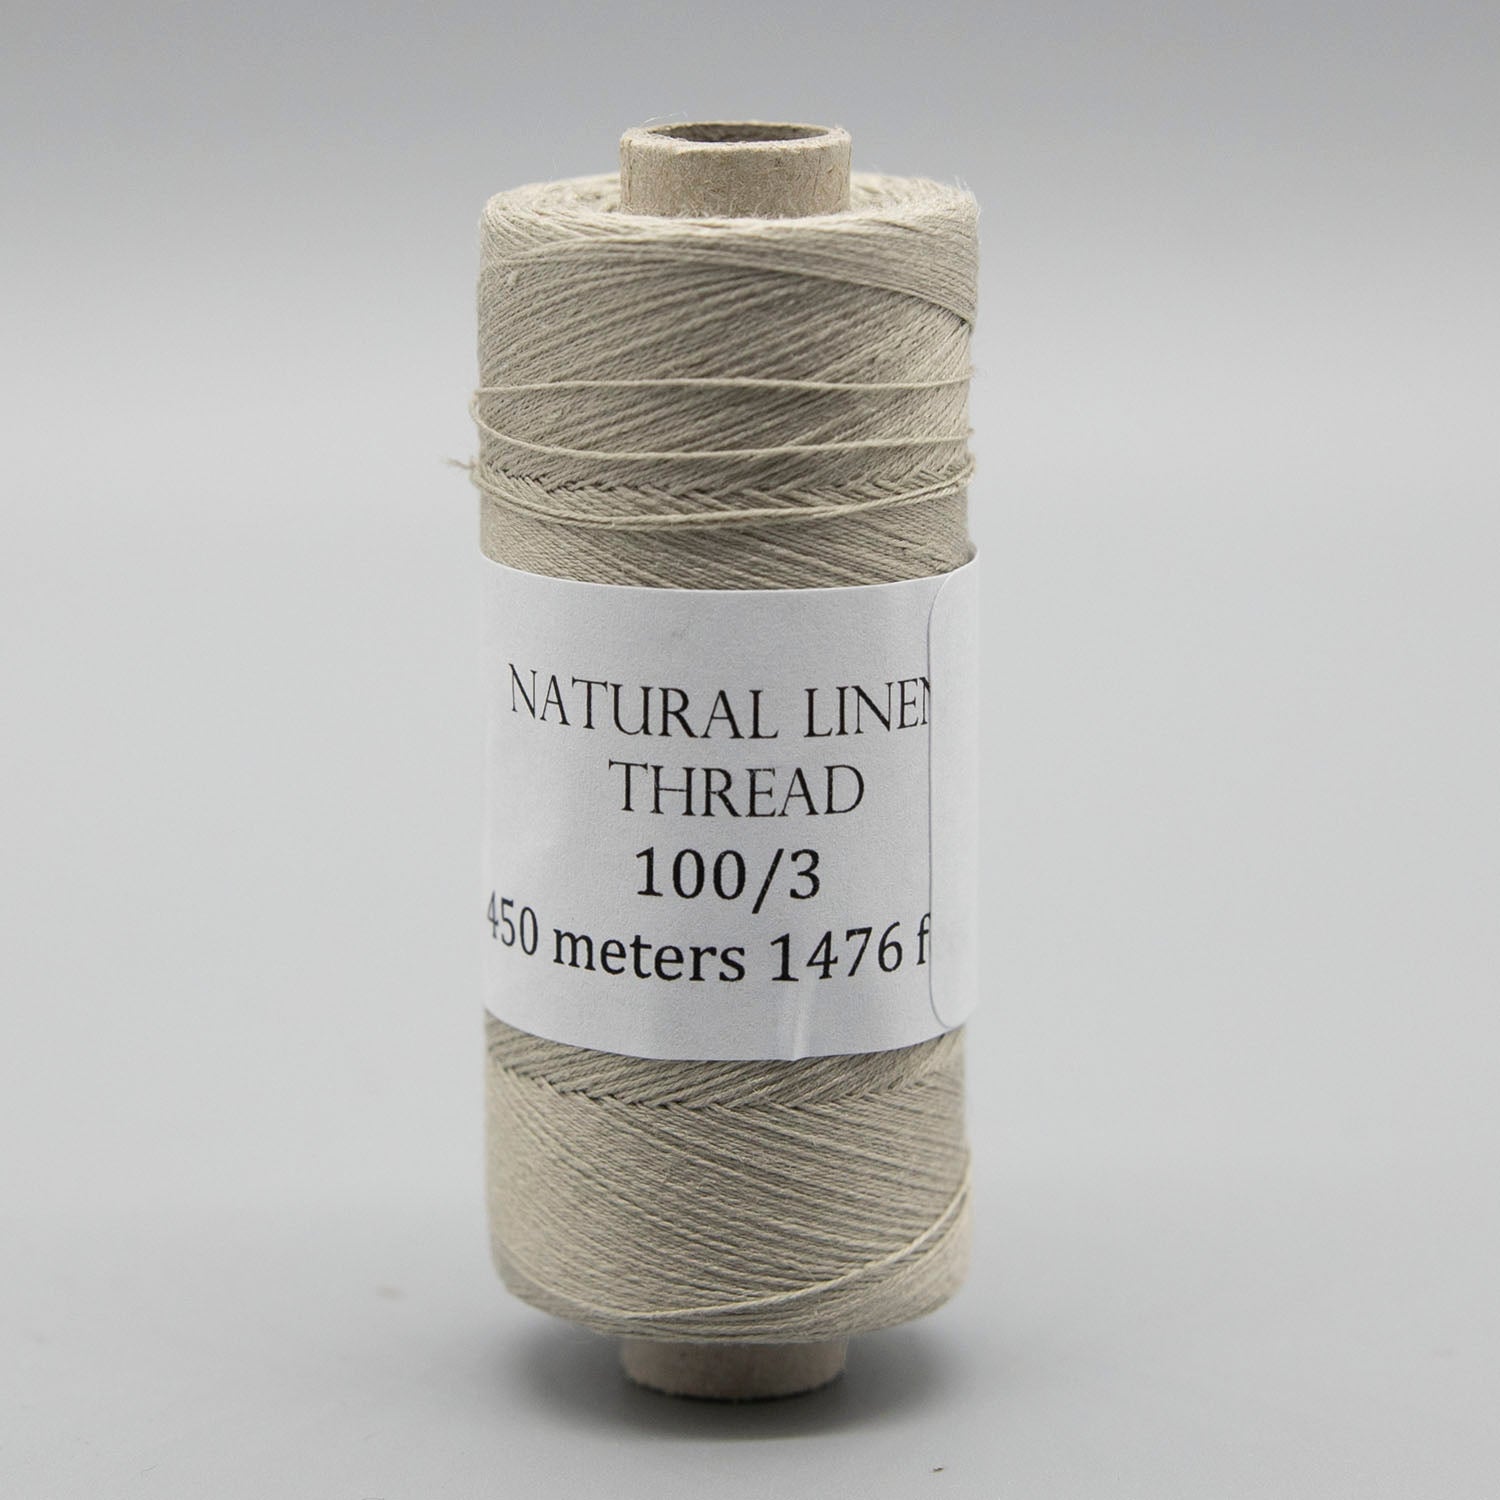 100% Linen Sets – The Bridal Thread